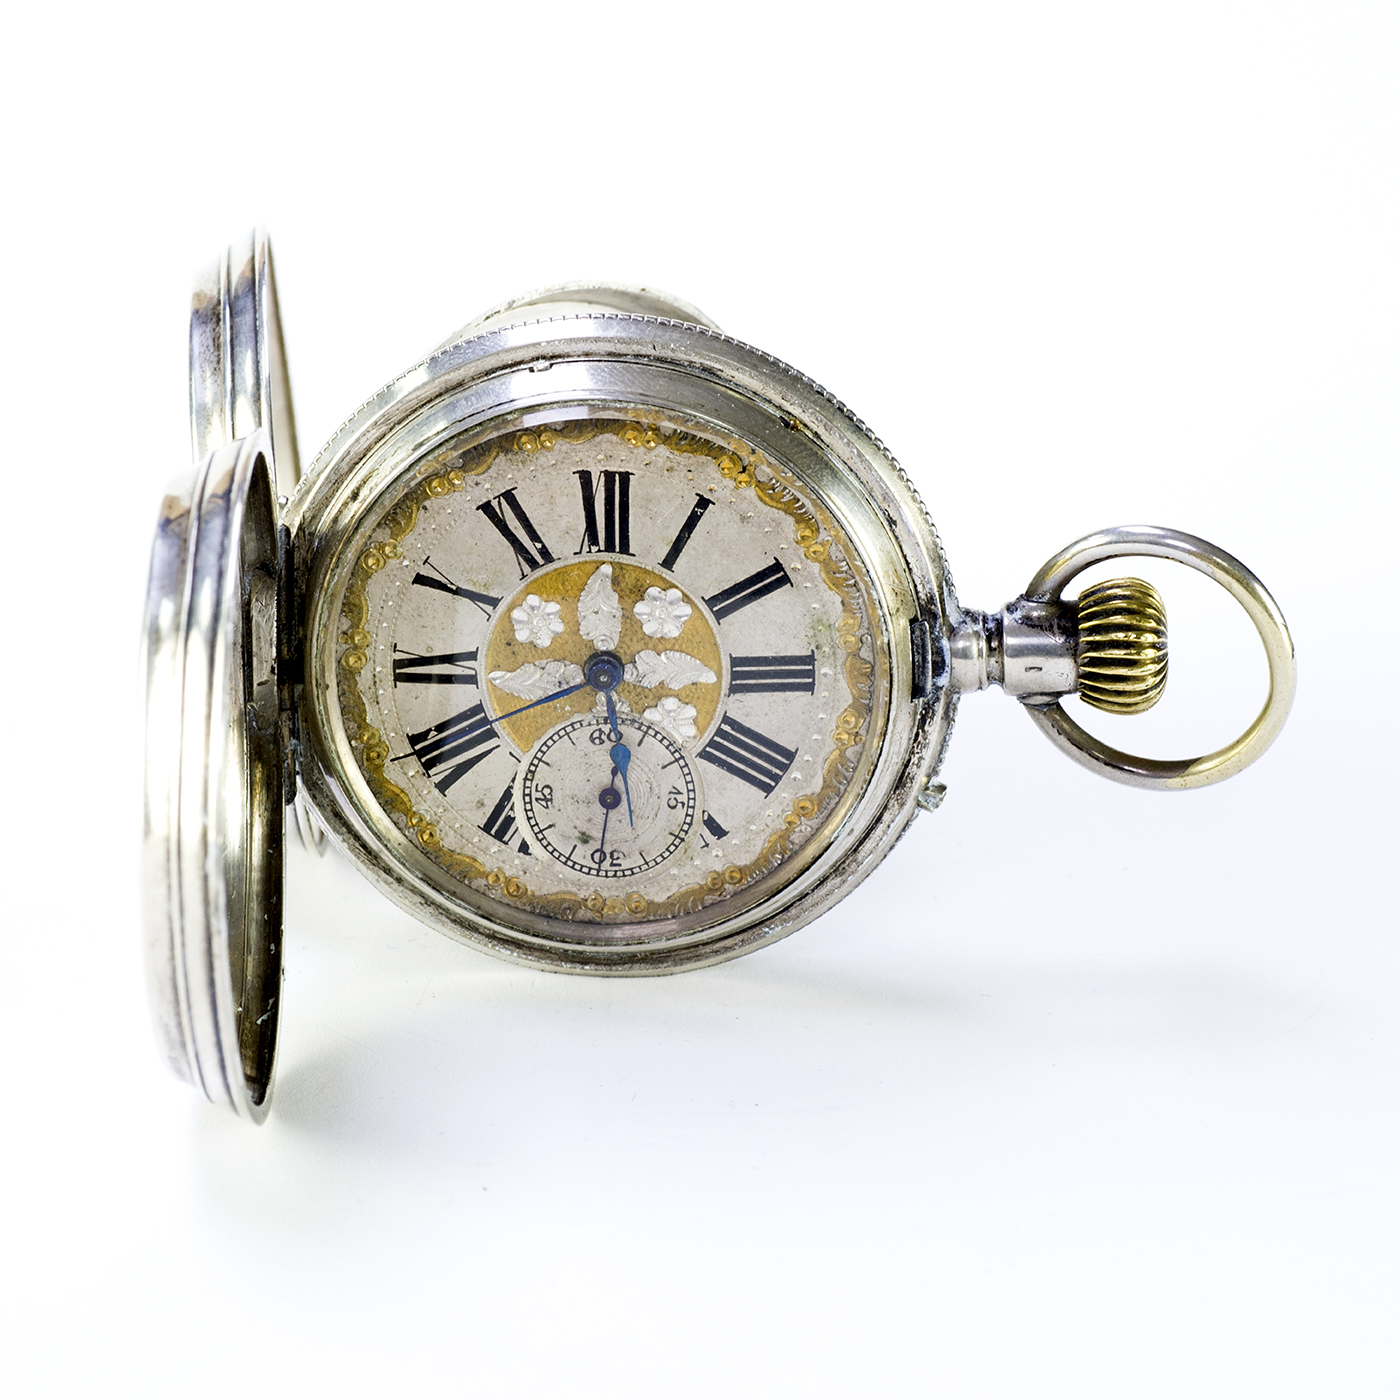 BLONDIN GENEVE. Reloj de bolsillo, saboneta y remontoir. Suiza, ca. 1880.